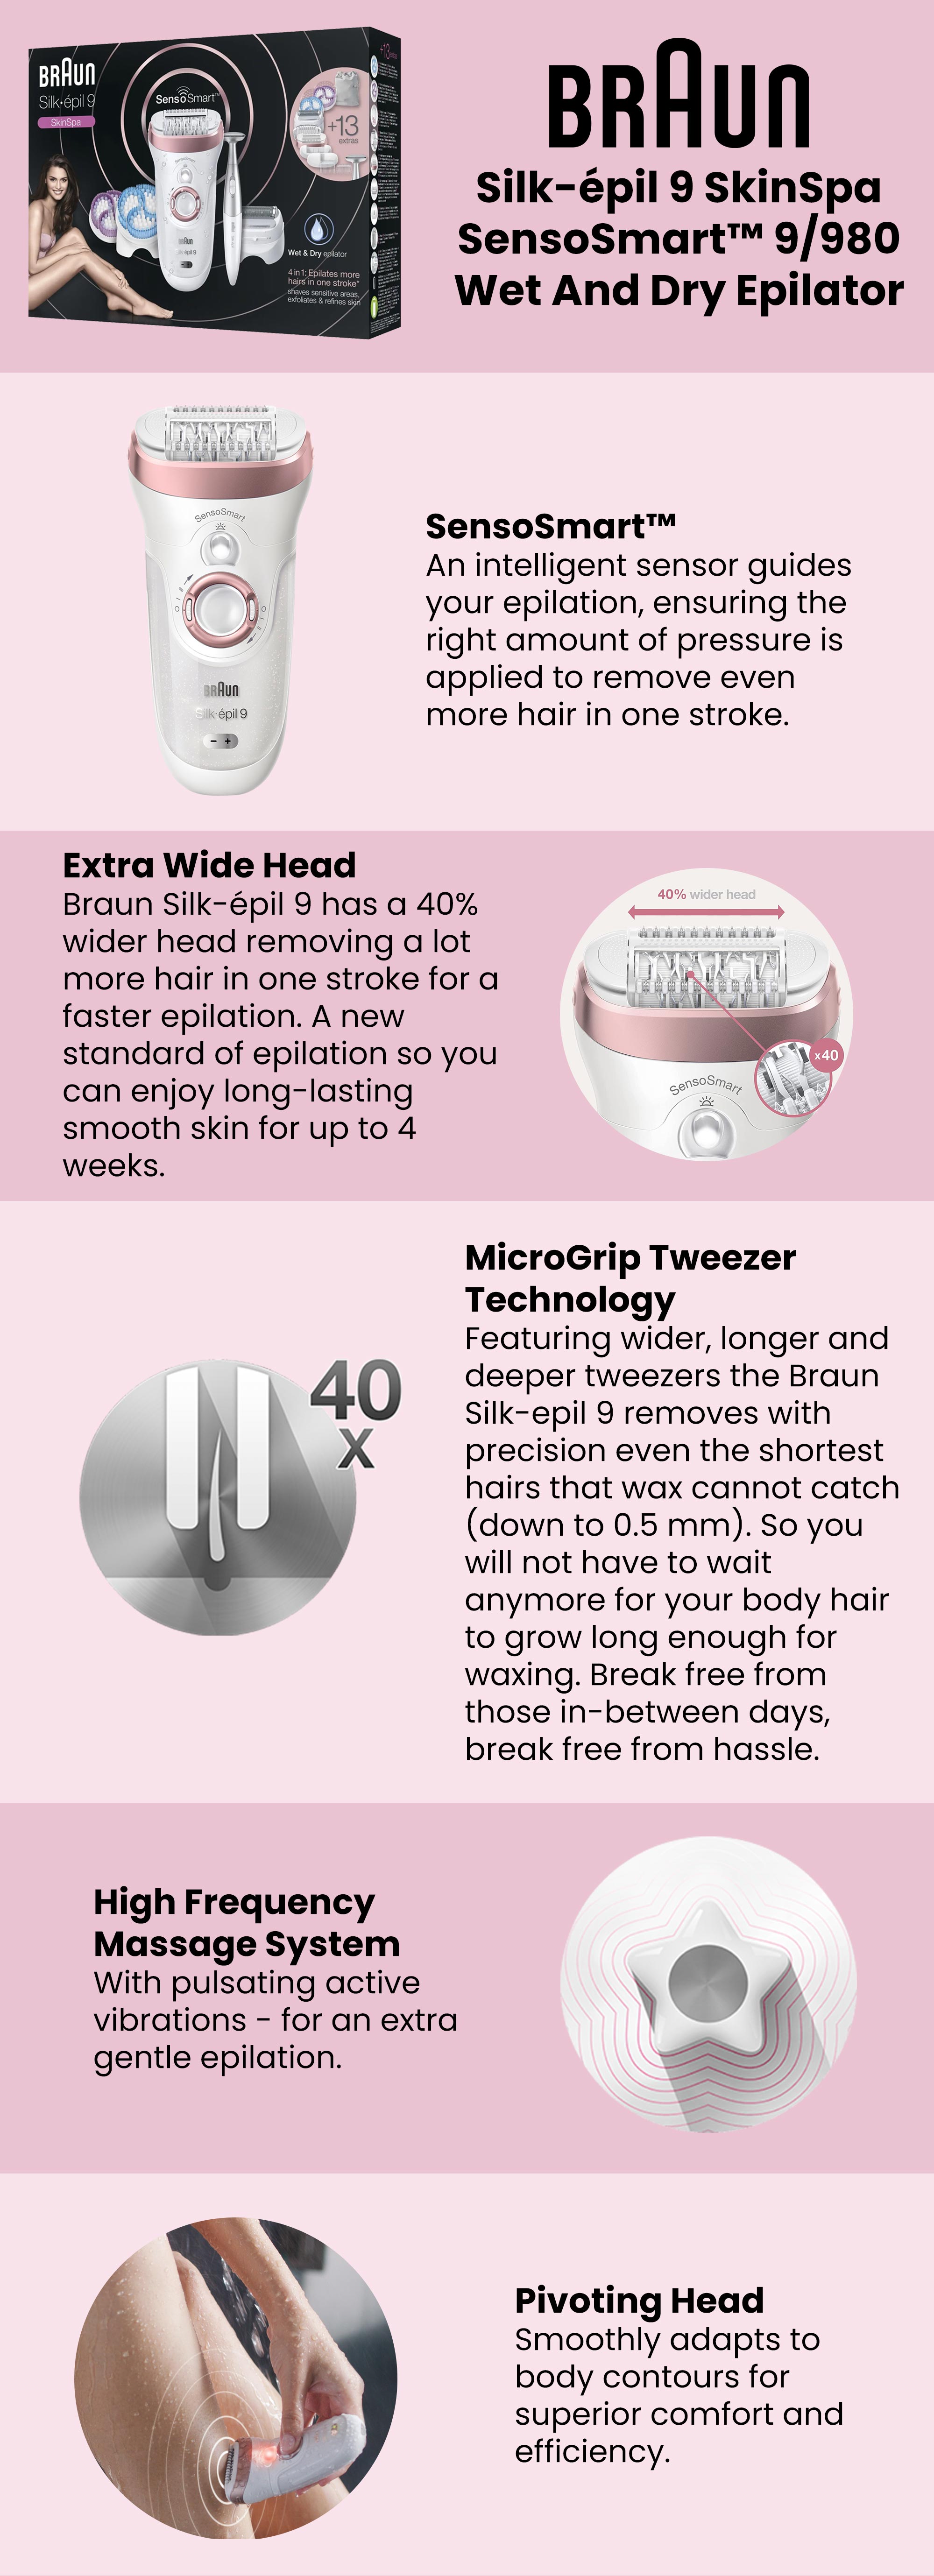 Braun 9980 Silk-epil 9 SkinSpa SensoSmart Epilator 4 in 1 Exfoliation Skin  Care System - Free Delivery